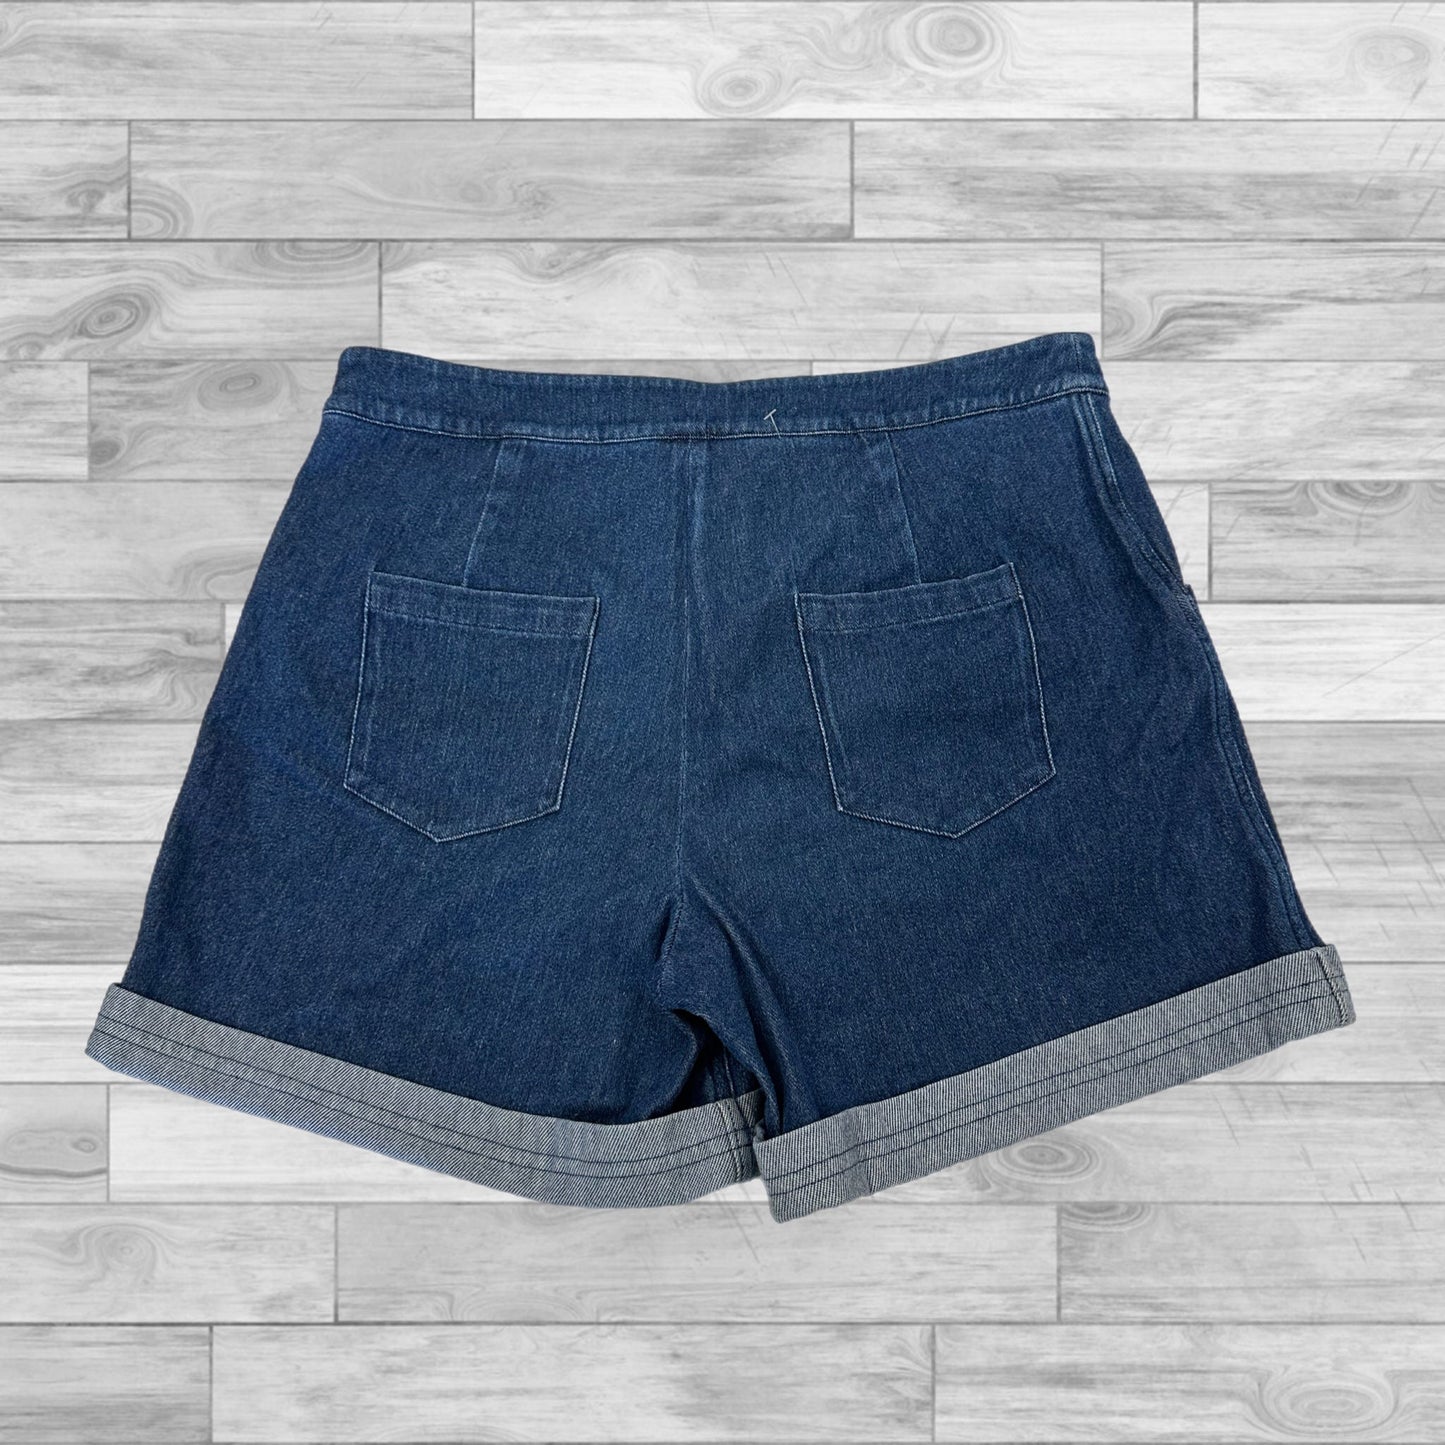 Shorts By Lysse  Size: 0